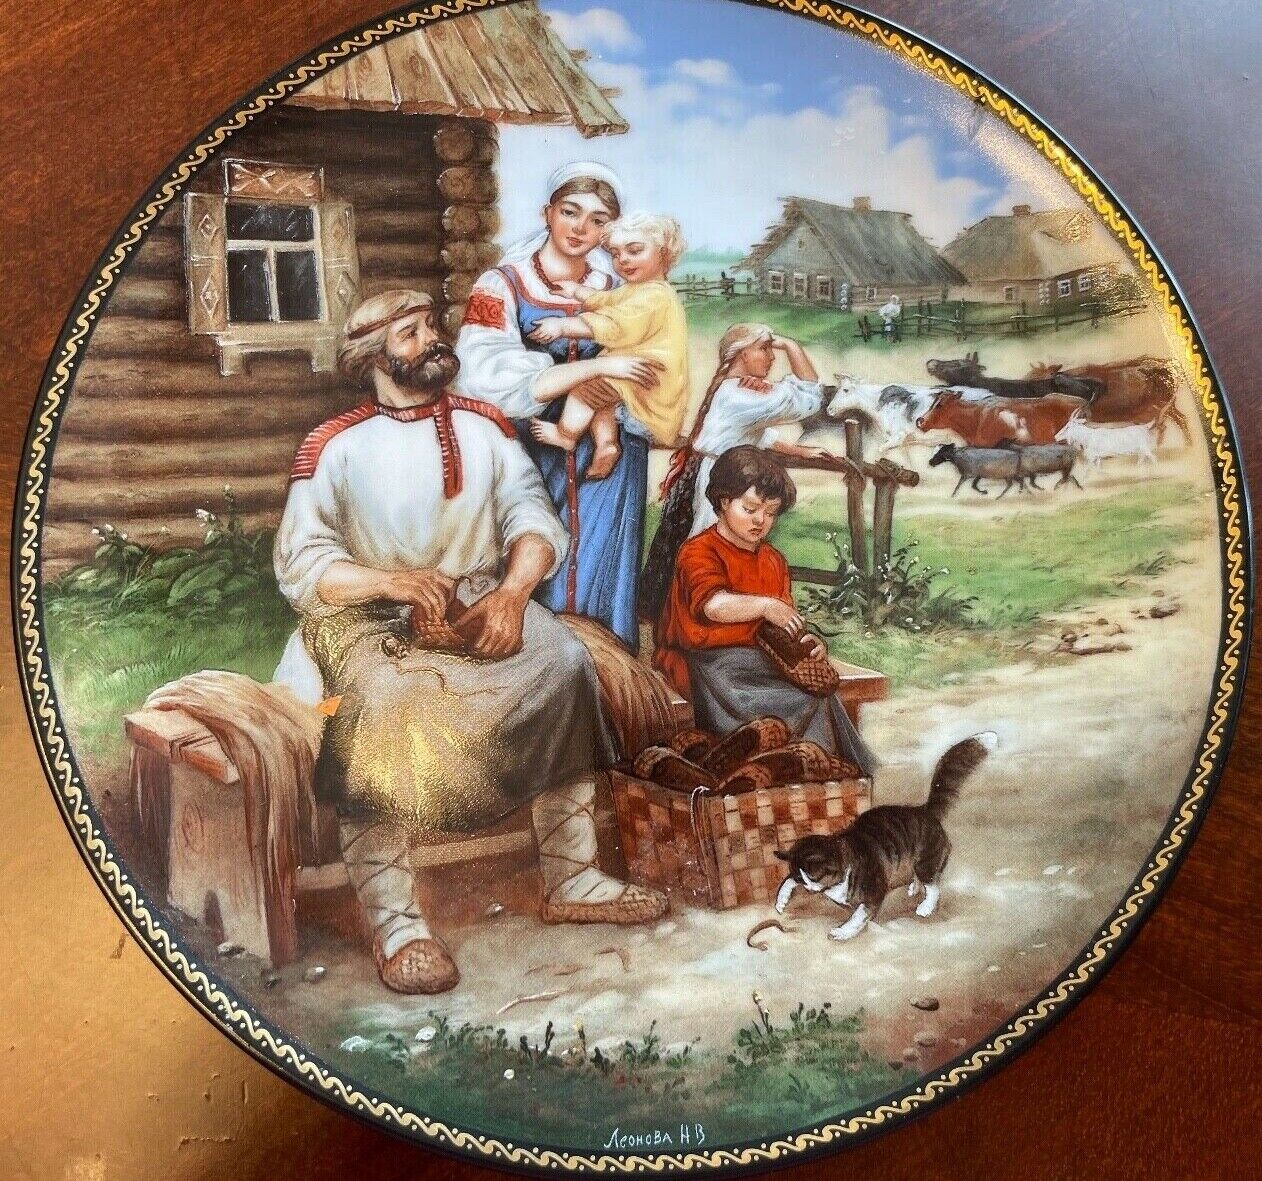 Bradex 1091 Russian Village Plate Number 60-B24-1.6